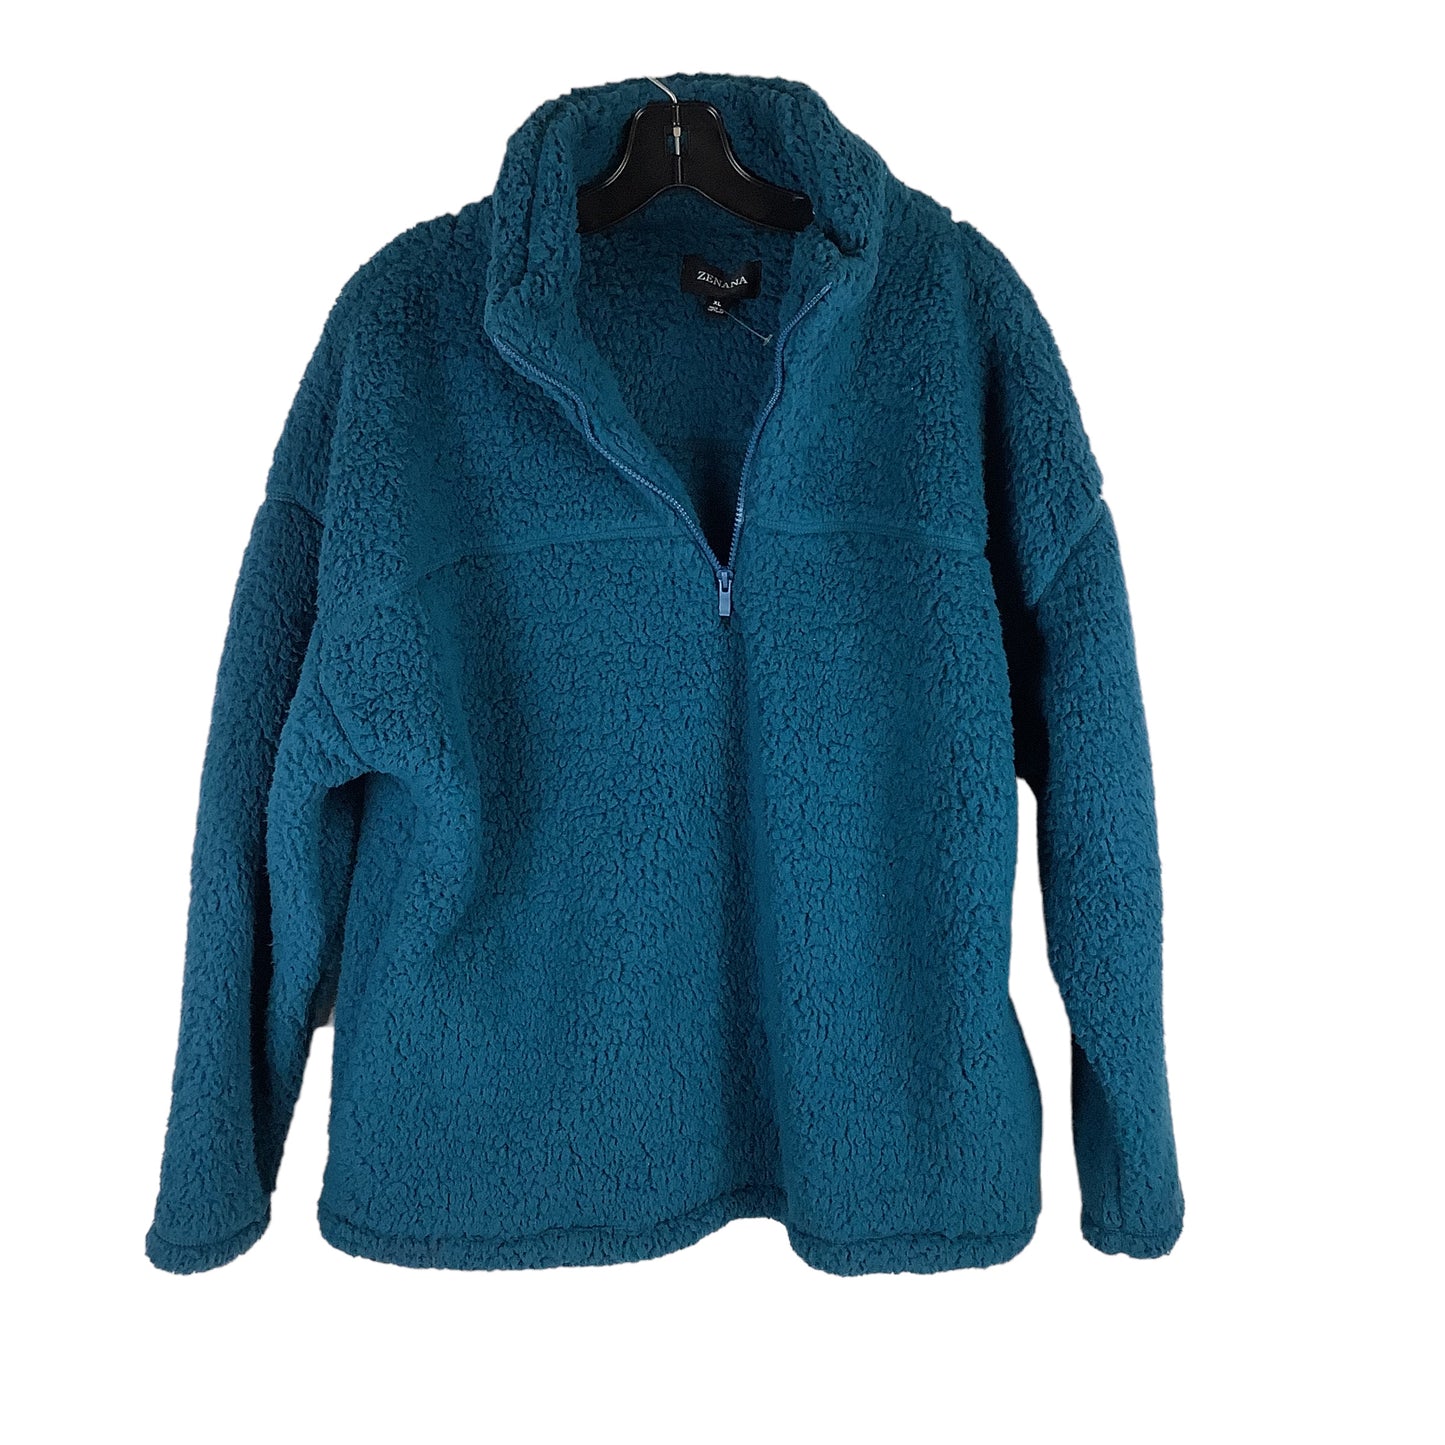 Jacket Faux Fur & Sherpa By Zenana Outfitters  Size: Xl